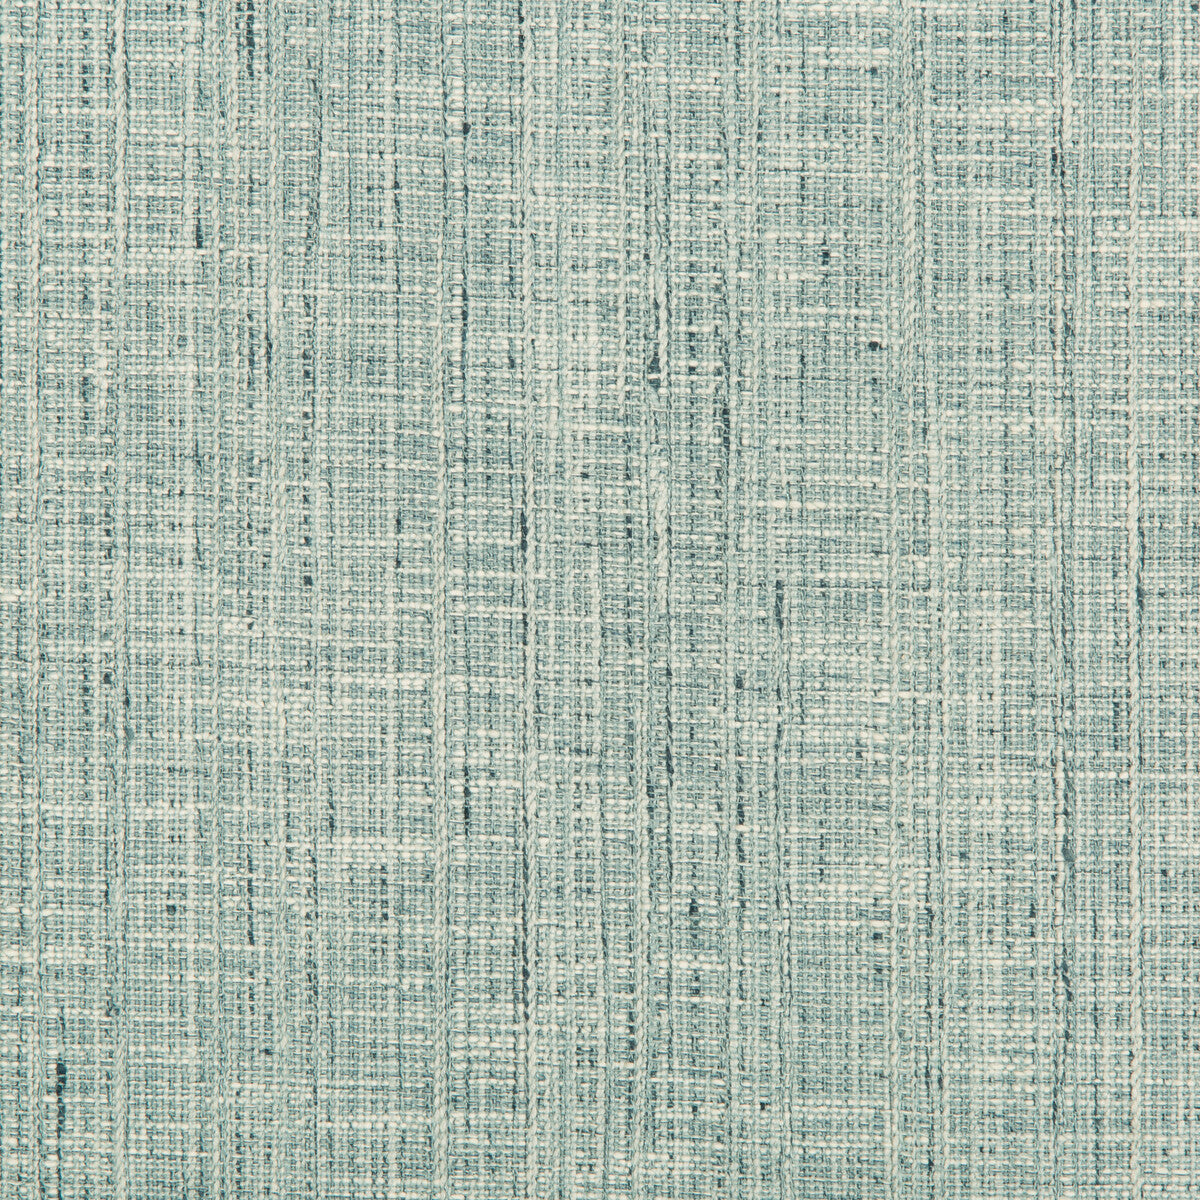 Kravet Smart fabric in 35319-35 color - pattern 35319.35.0 - by Kravet Smart in the Performance Kravetarmor collection